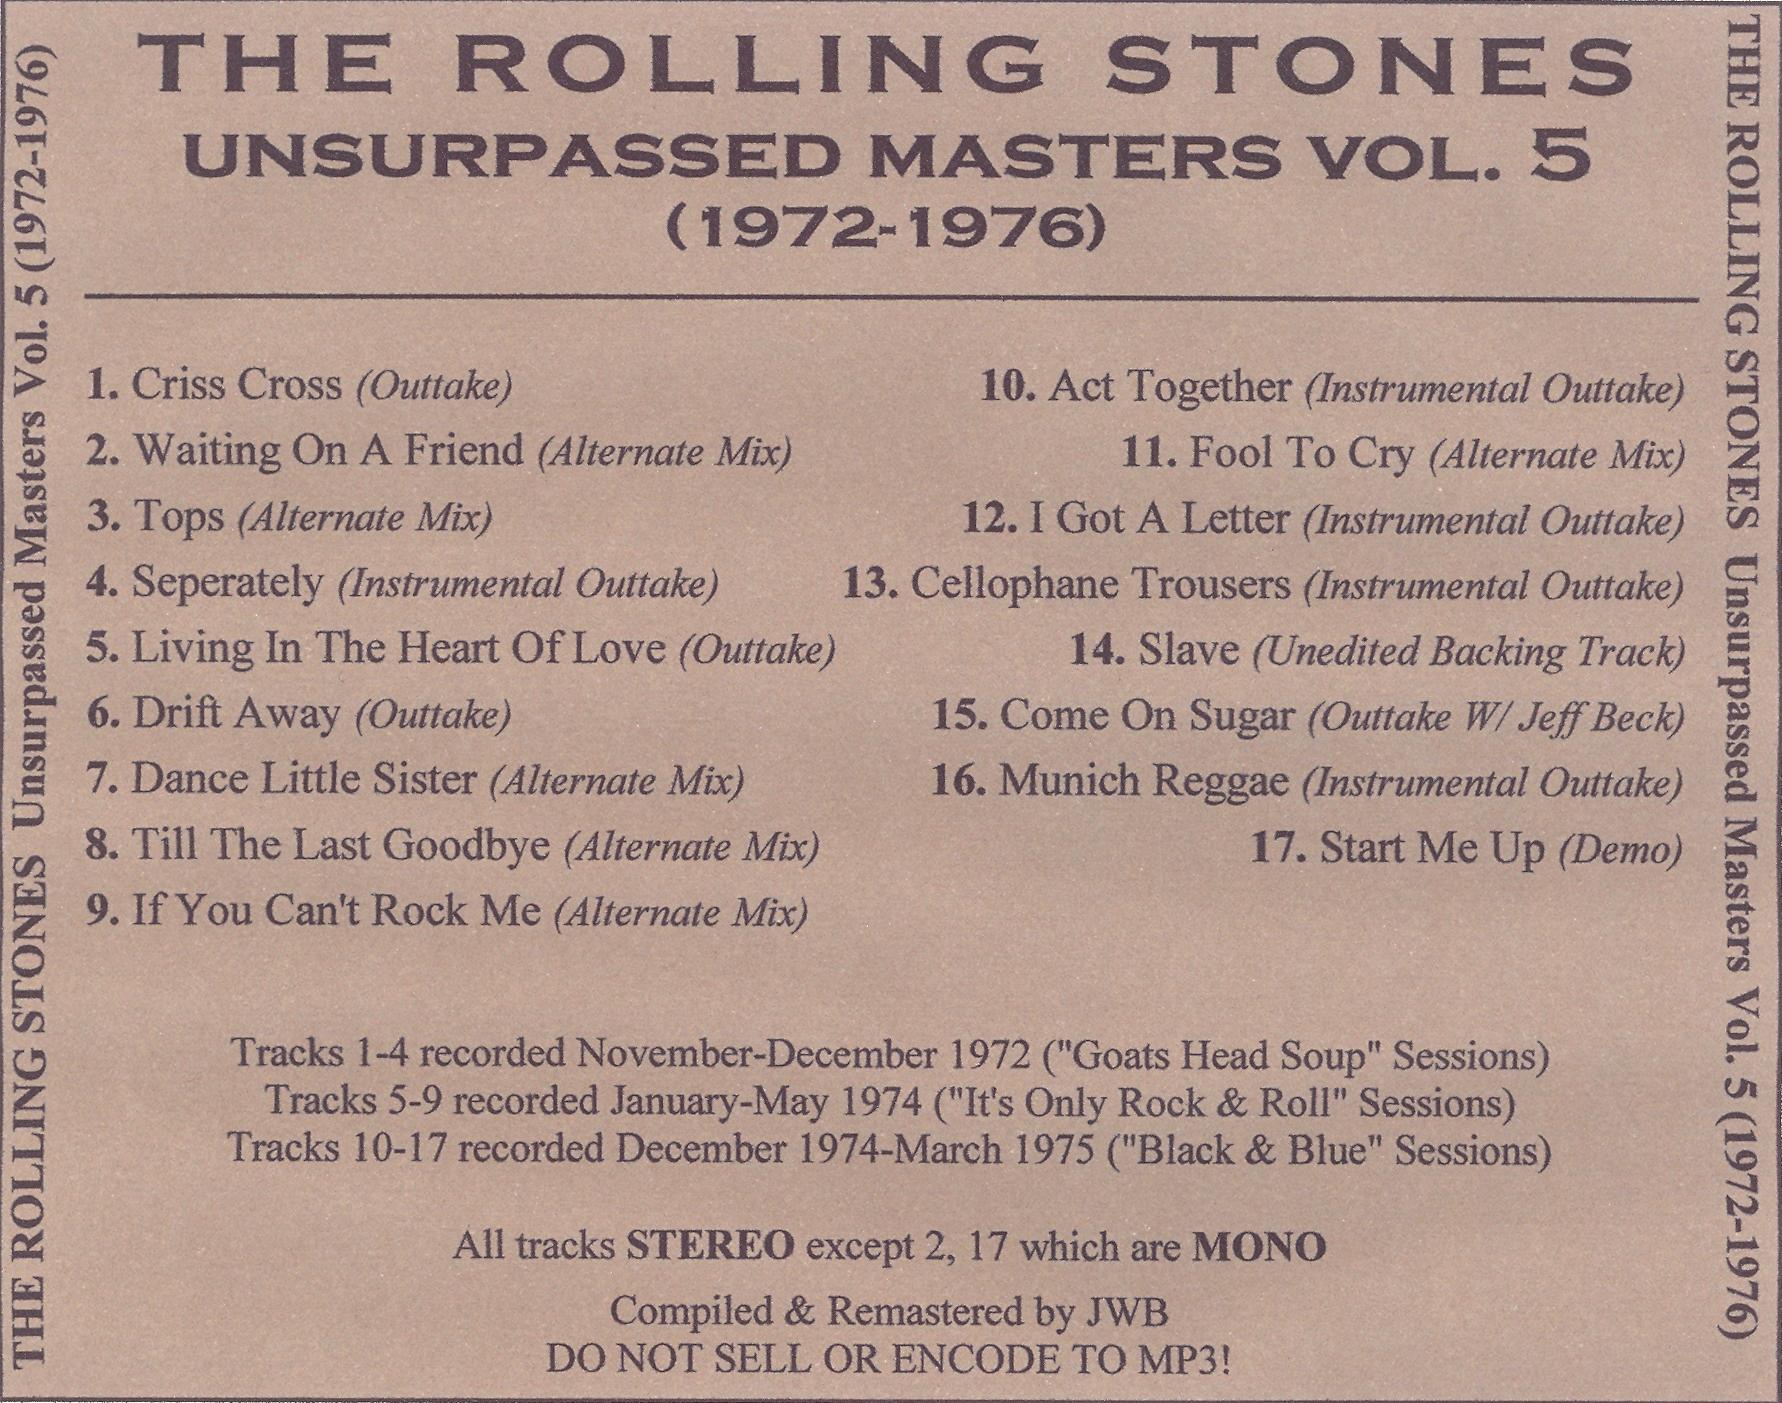 RollingStones1972-1976UnsurpassedMastersVol5 (2).jpg